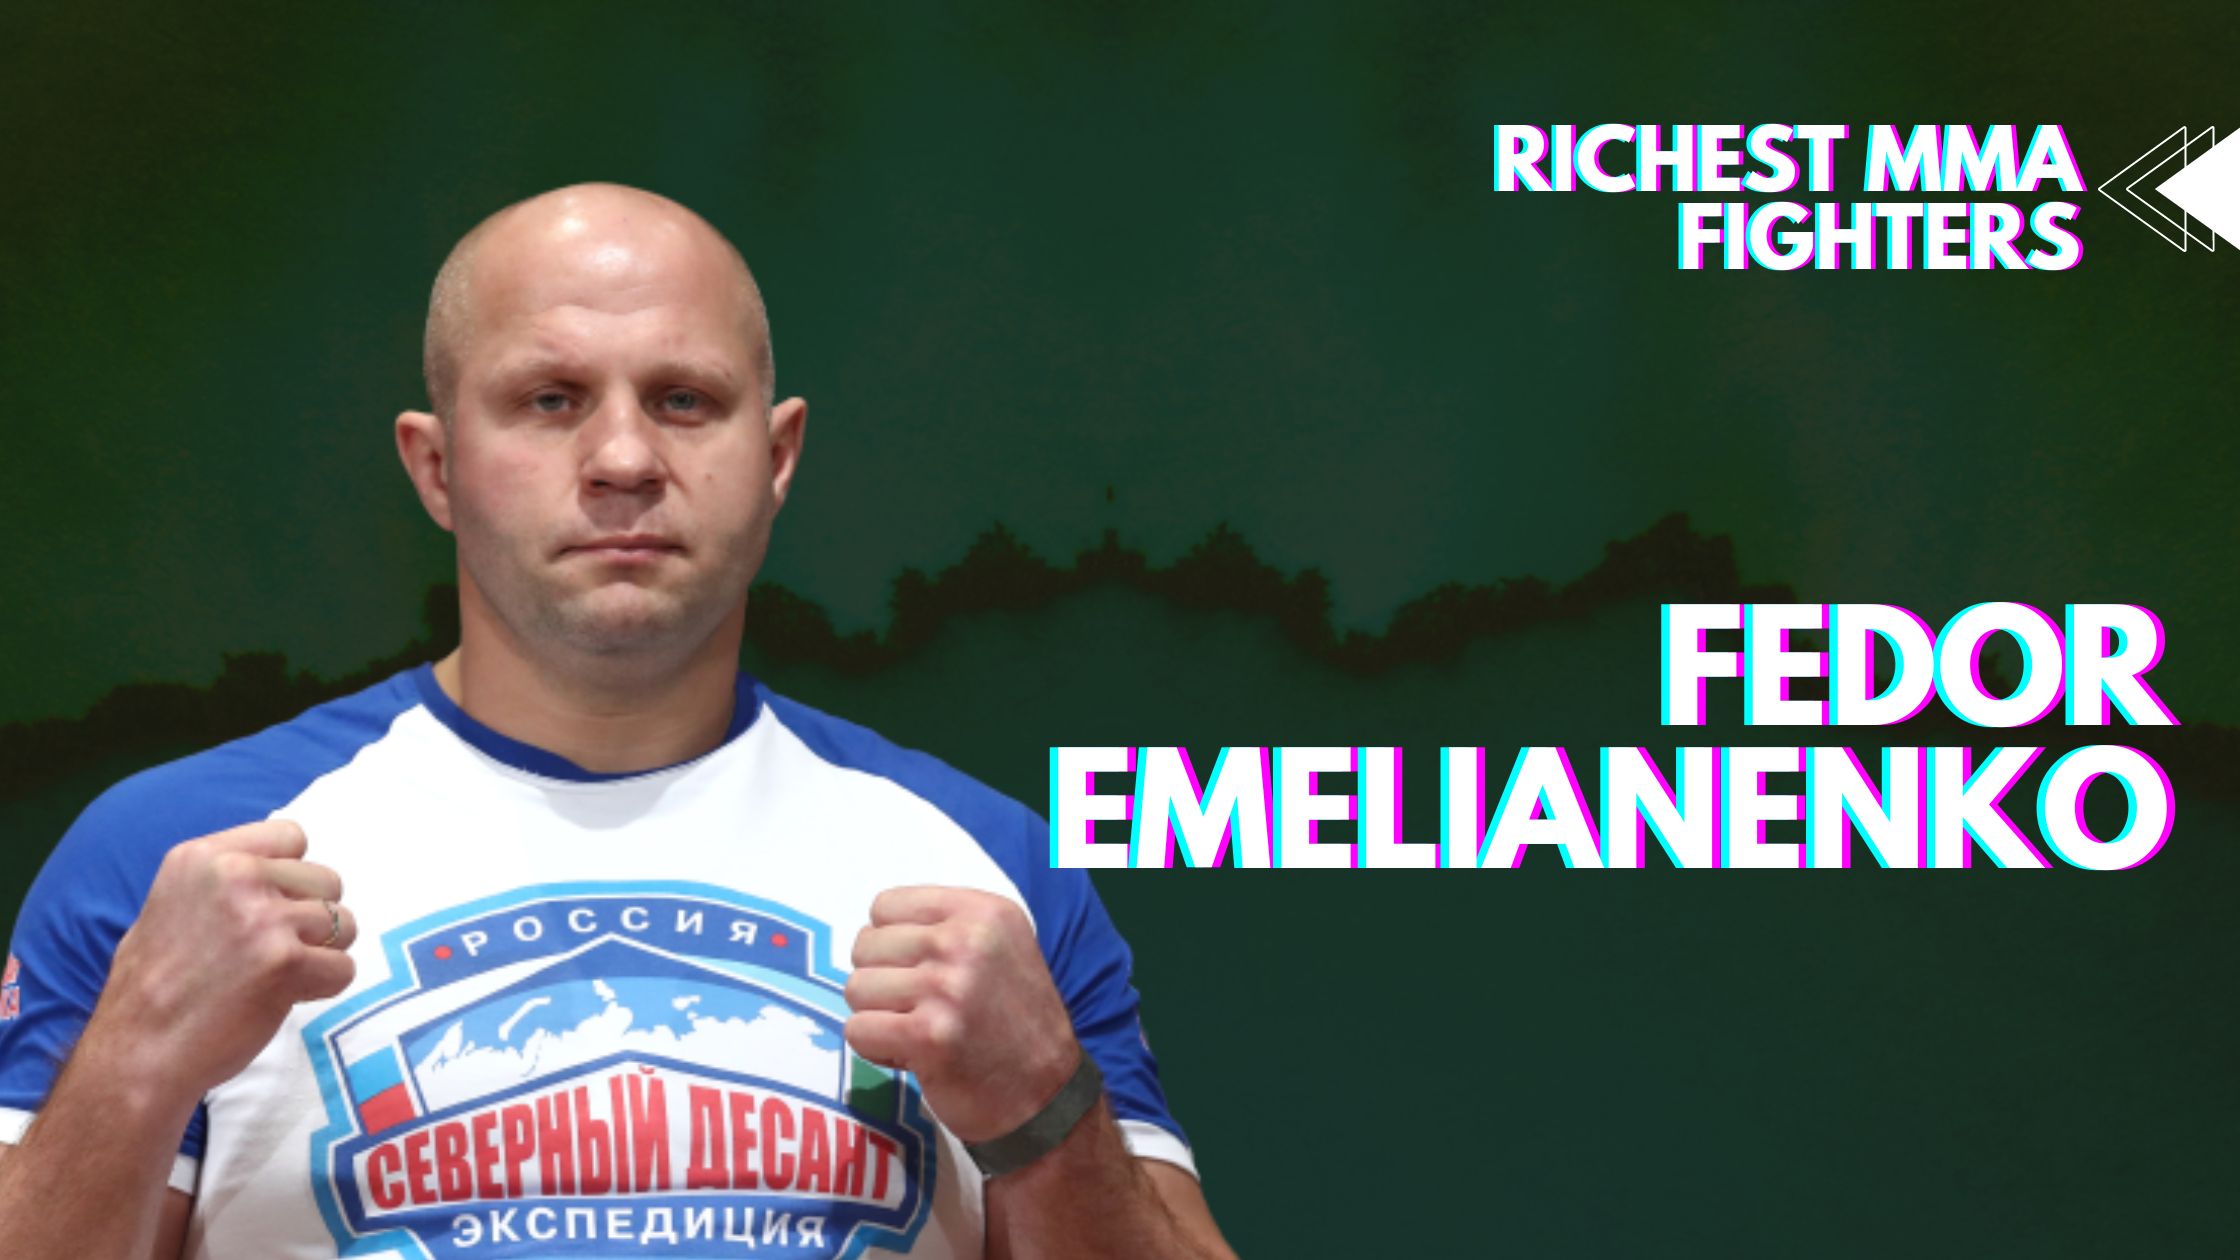 Fedor Emelianenko - Richest MMA fighters